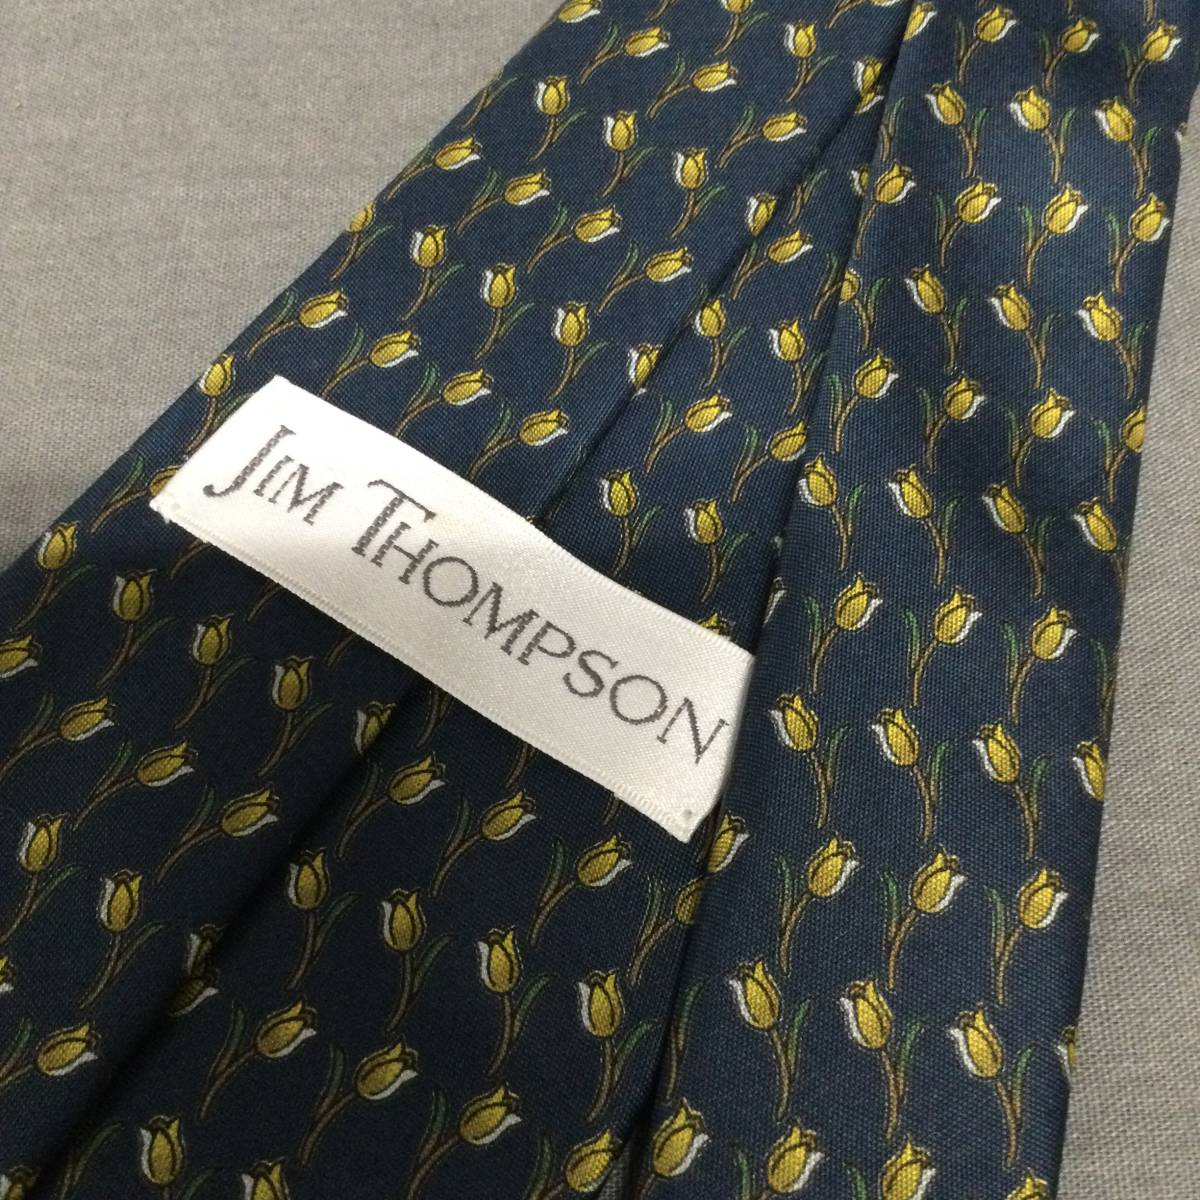 051207　251965-20　JIM THOMPSON　ジムトンプソン　ネクタイ　花柄ネイビー系カラー　メンズファッション小物　紳士服飾